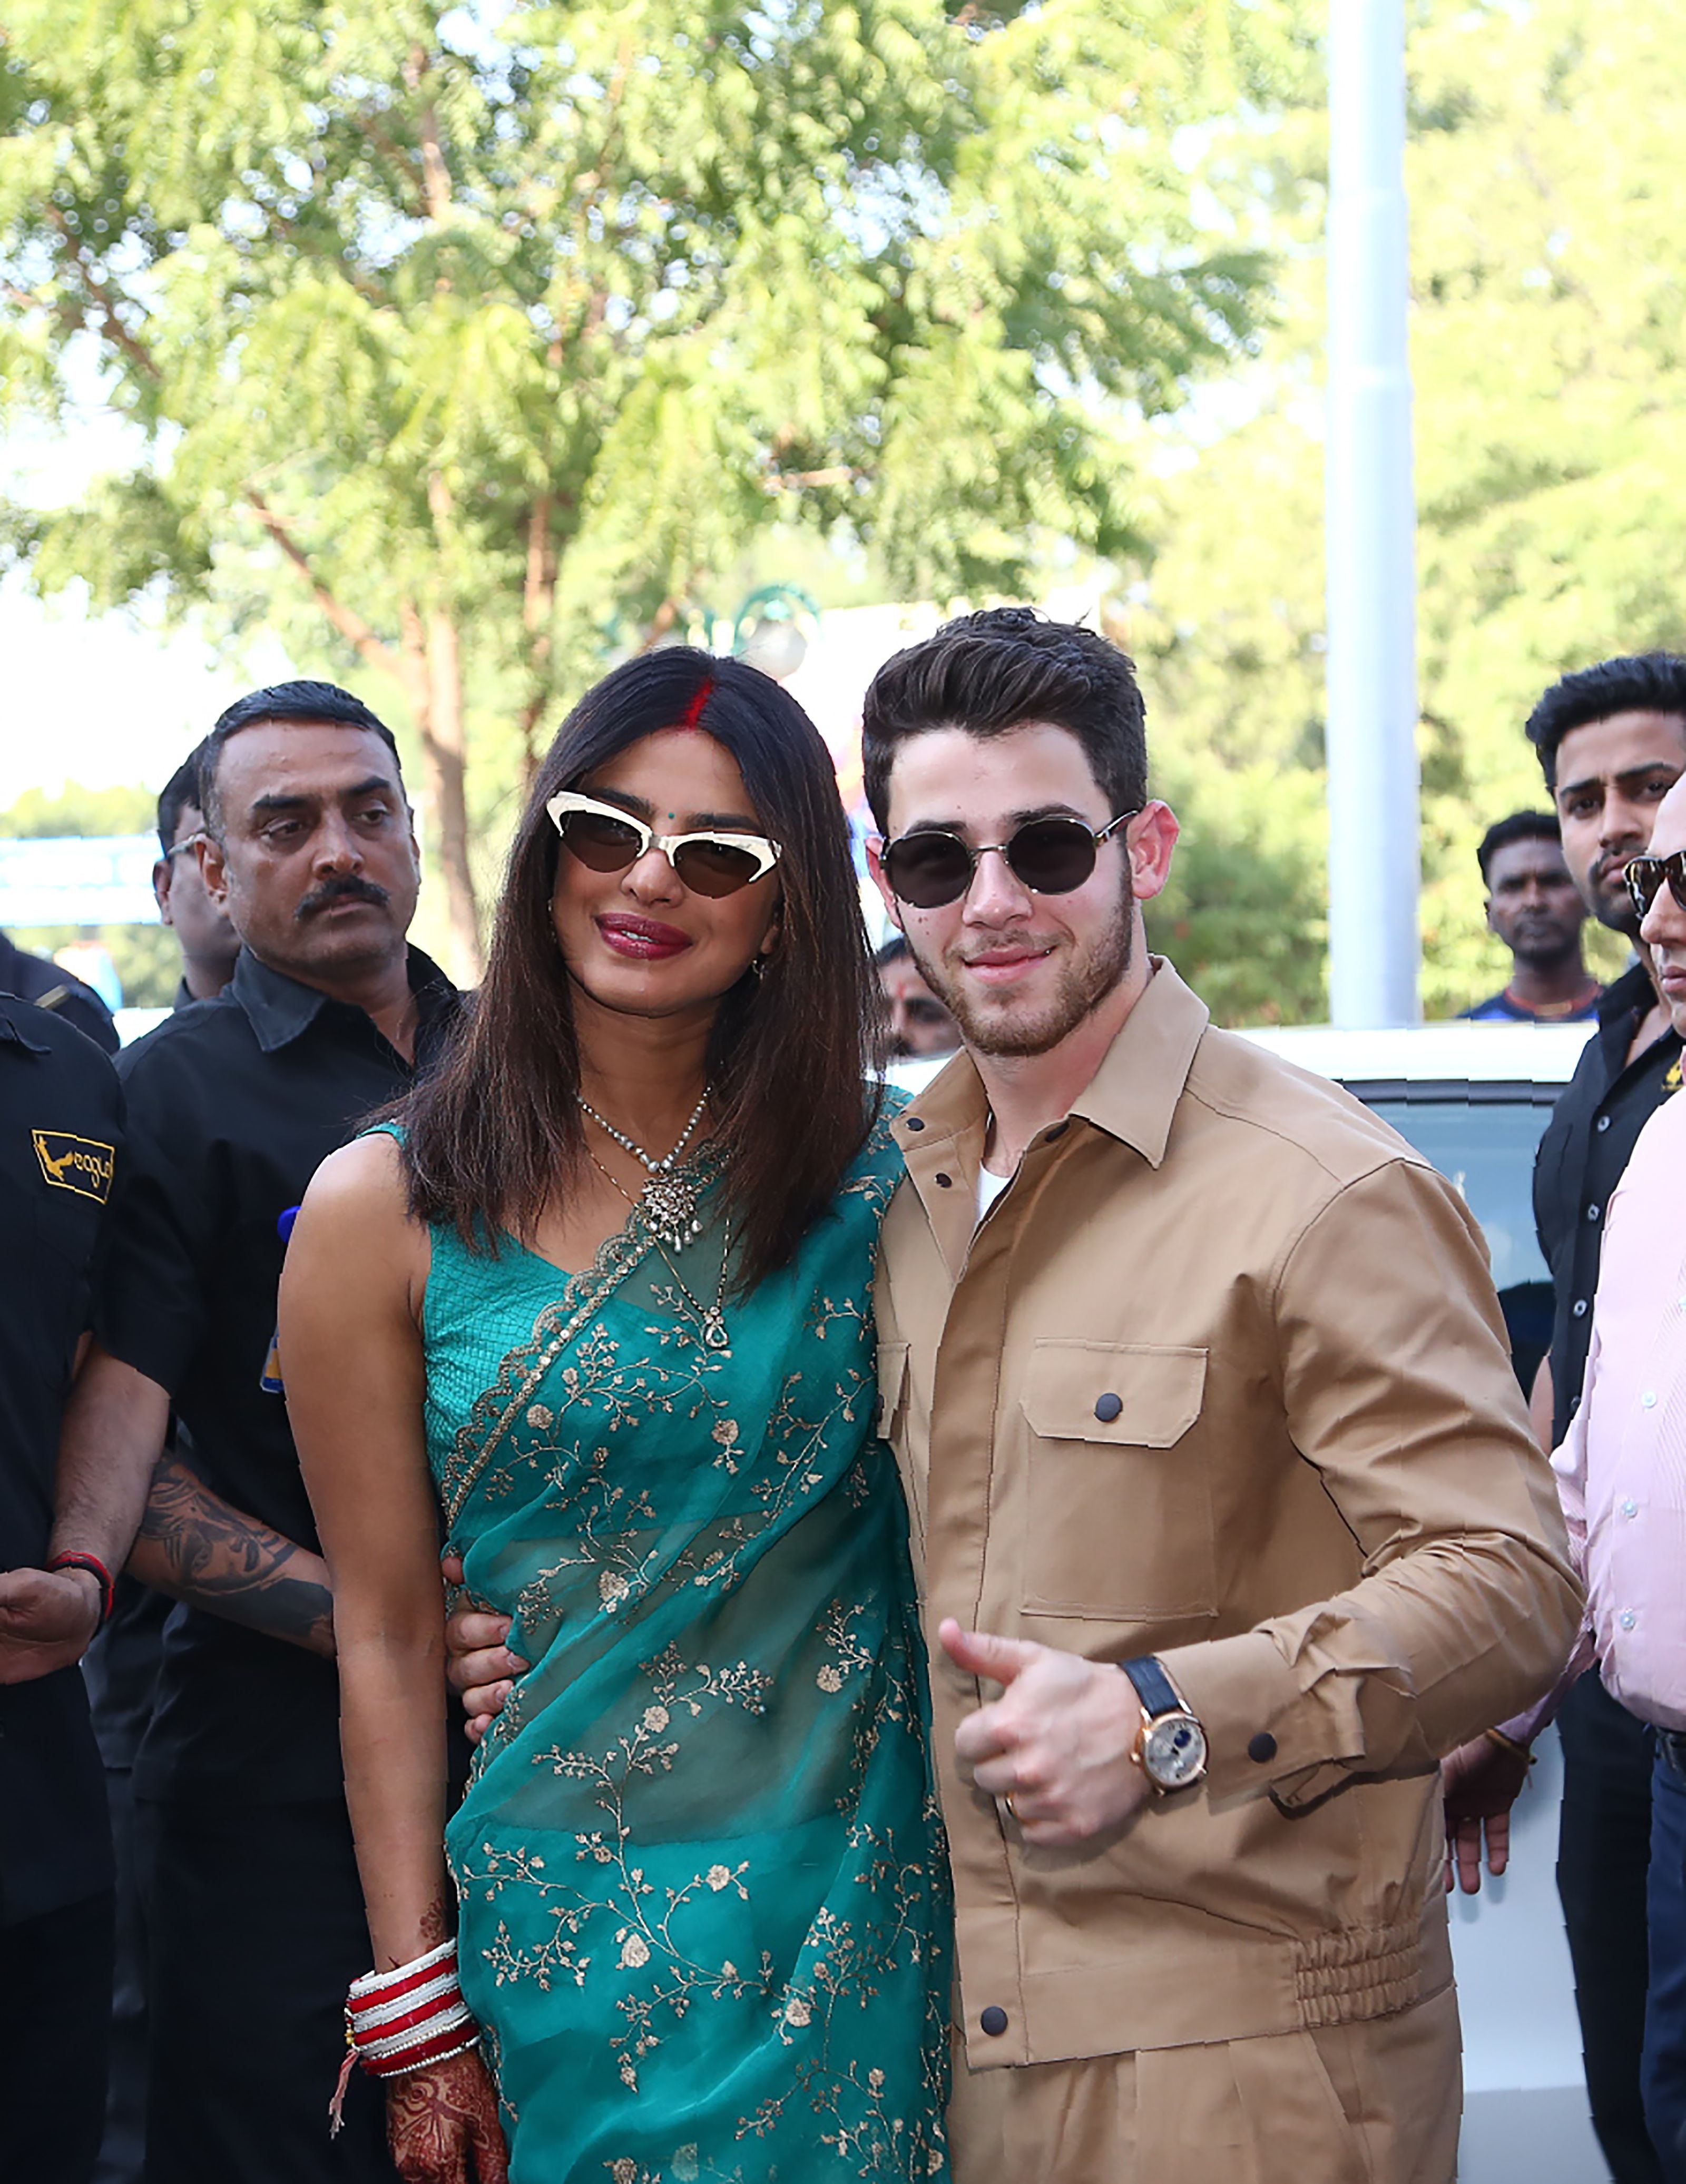 Priyanka Chopra to Wear Custom Ralph Lauren Wedding Dress to Marry Nick  Jonas | Met gala outfits, Met gala dresses, Met gala looks